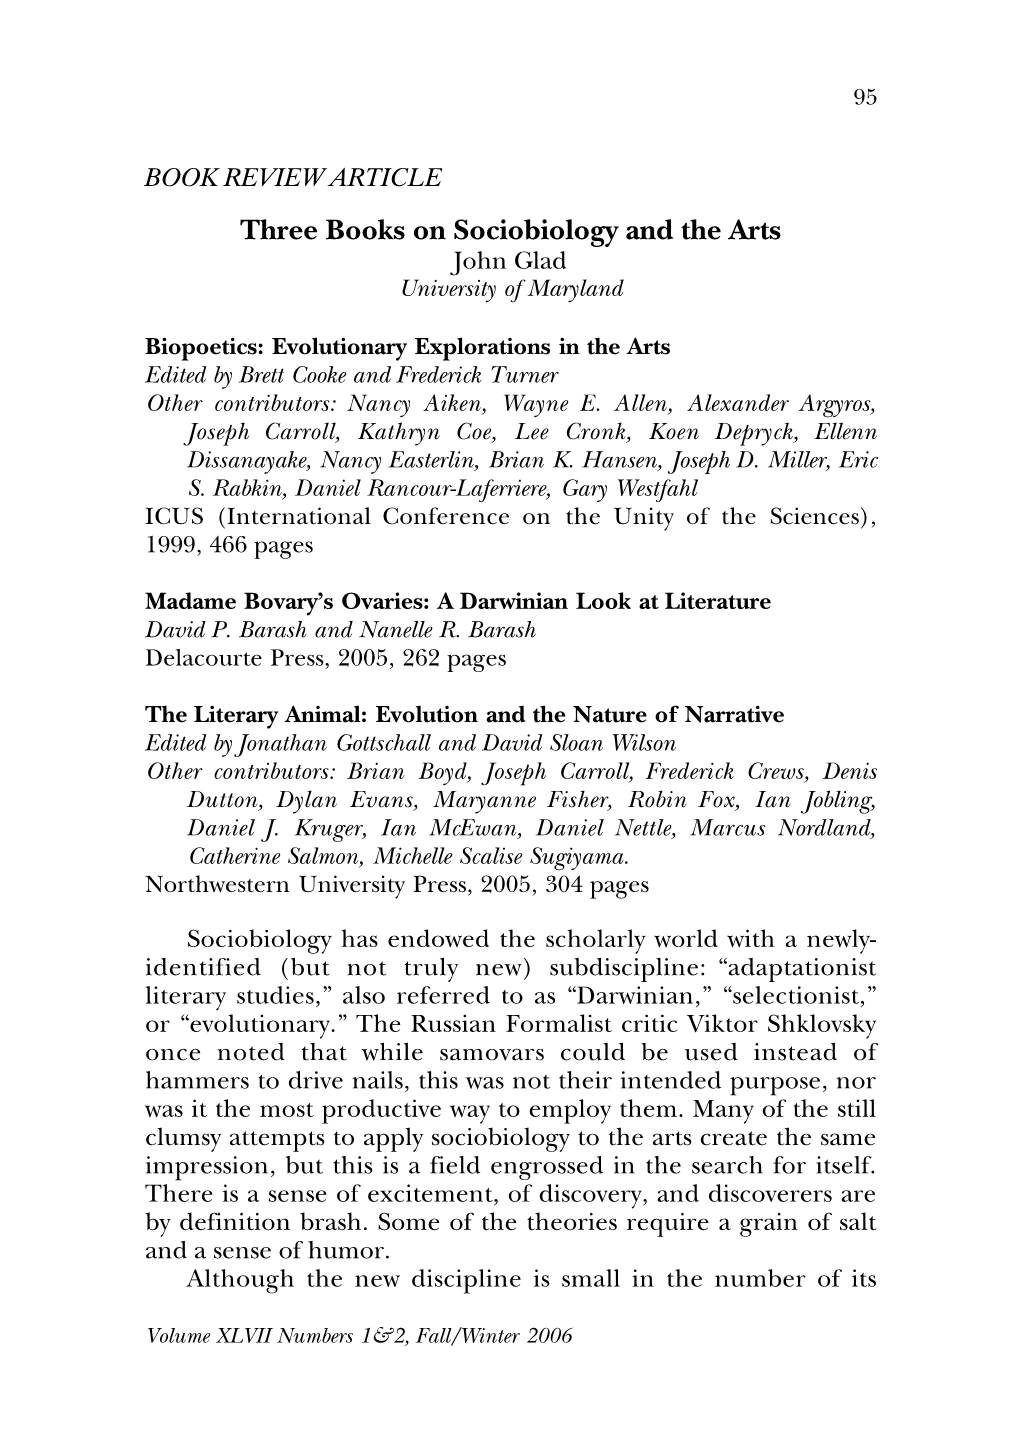 Glad, John. 2006. Three Books on Sociobiology and the Arts